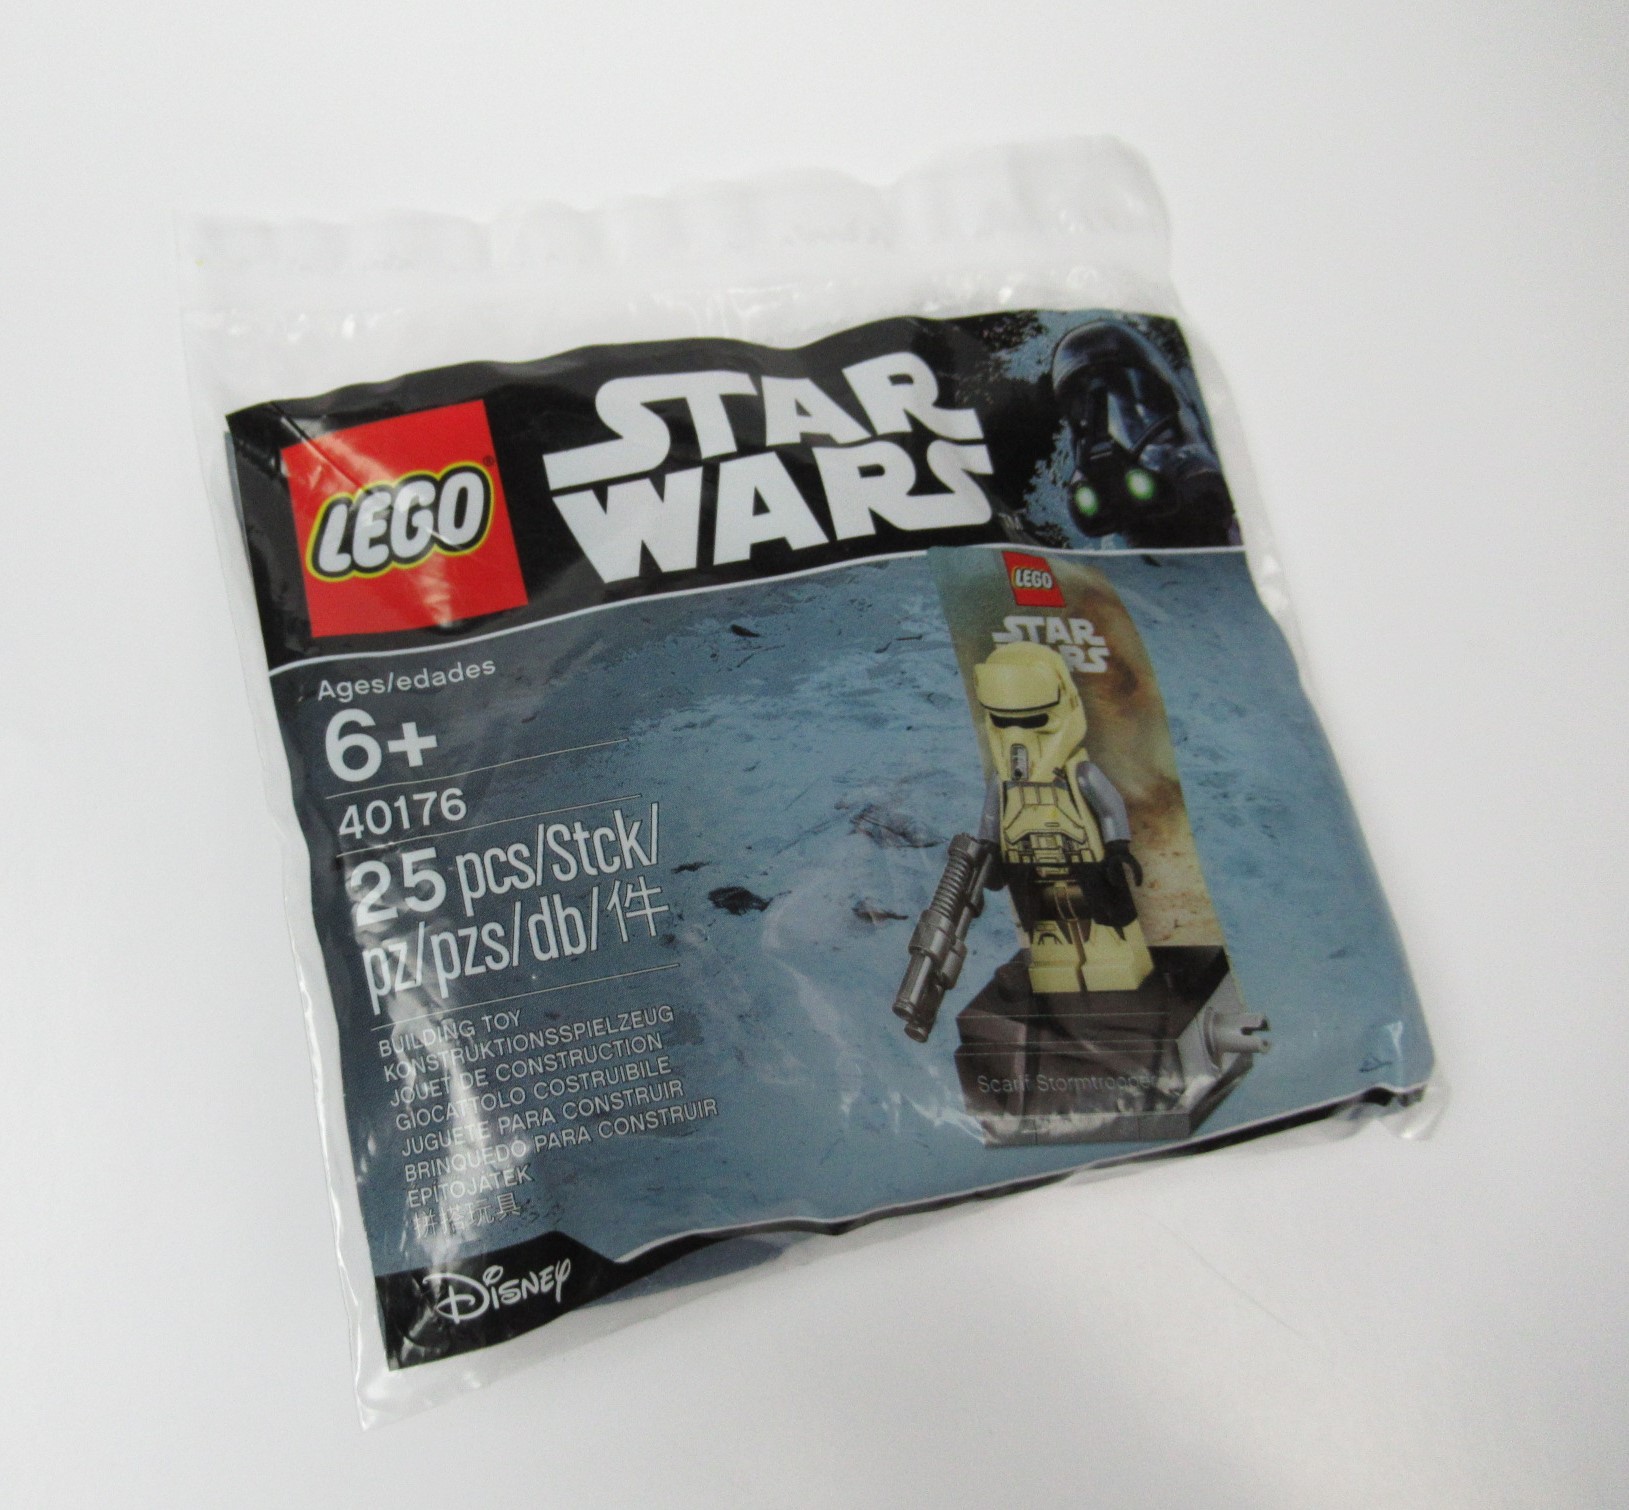 Immagine relativa a LEGO® Star Wars 40176 Star Wars Scarif Stormtrooper Polybag